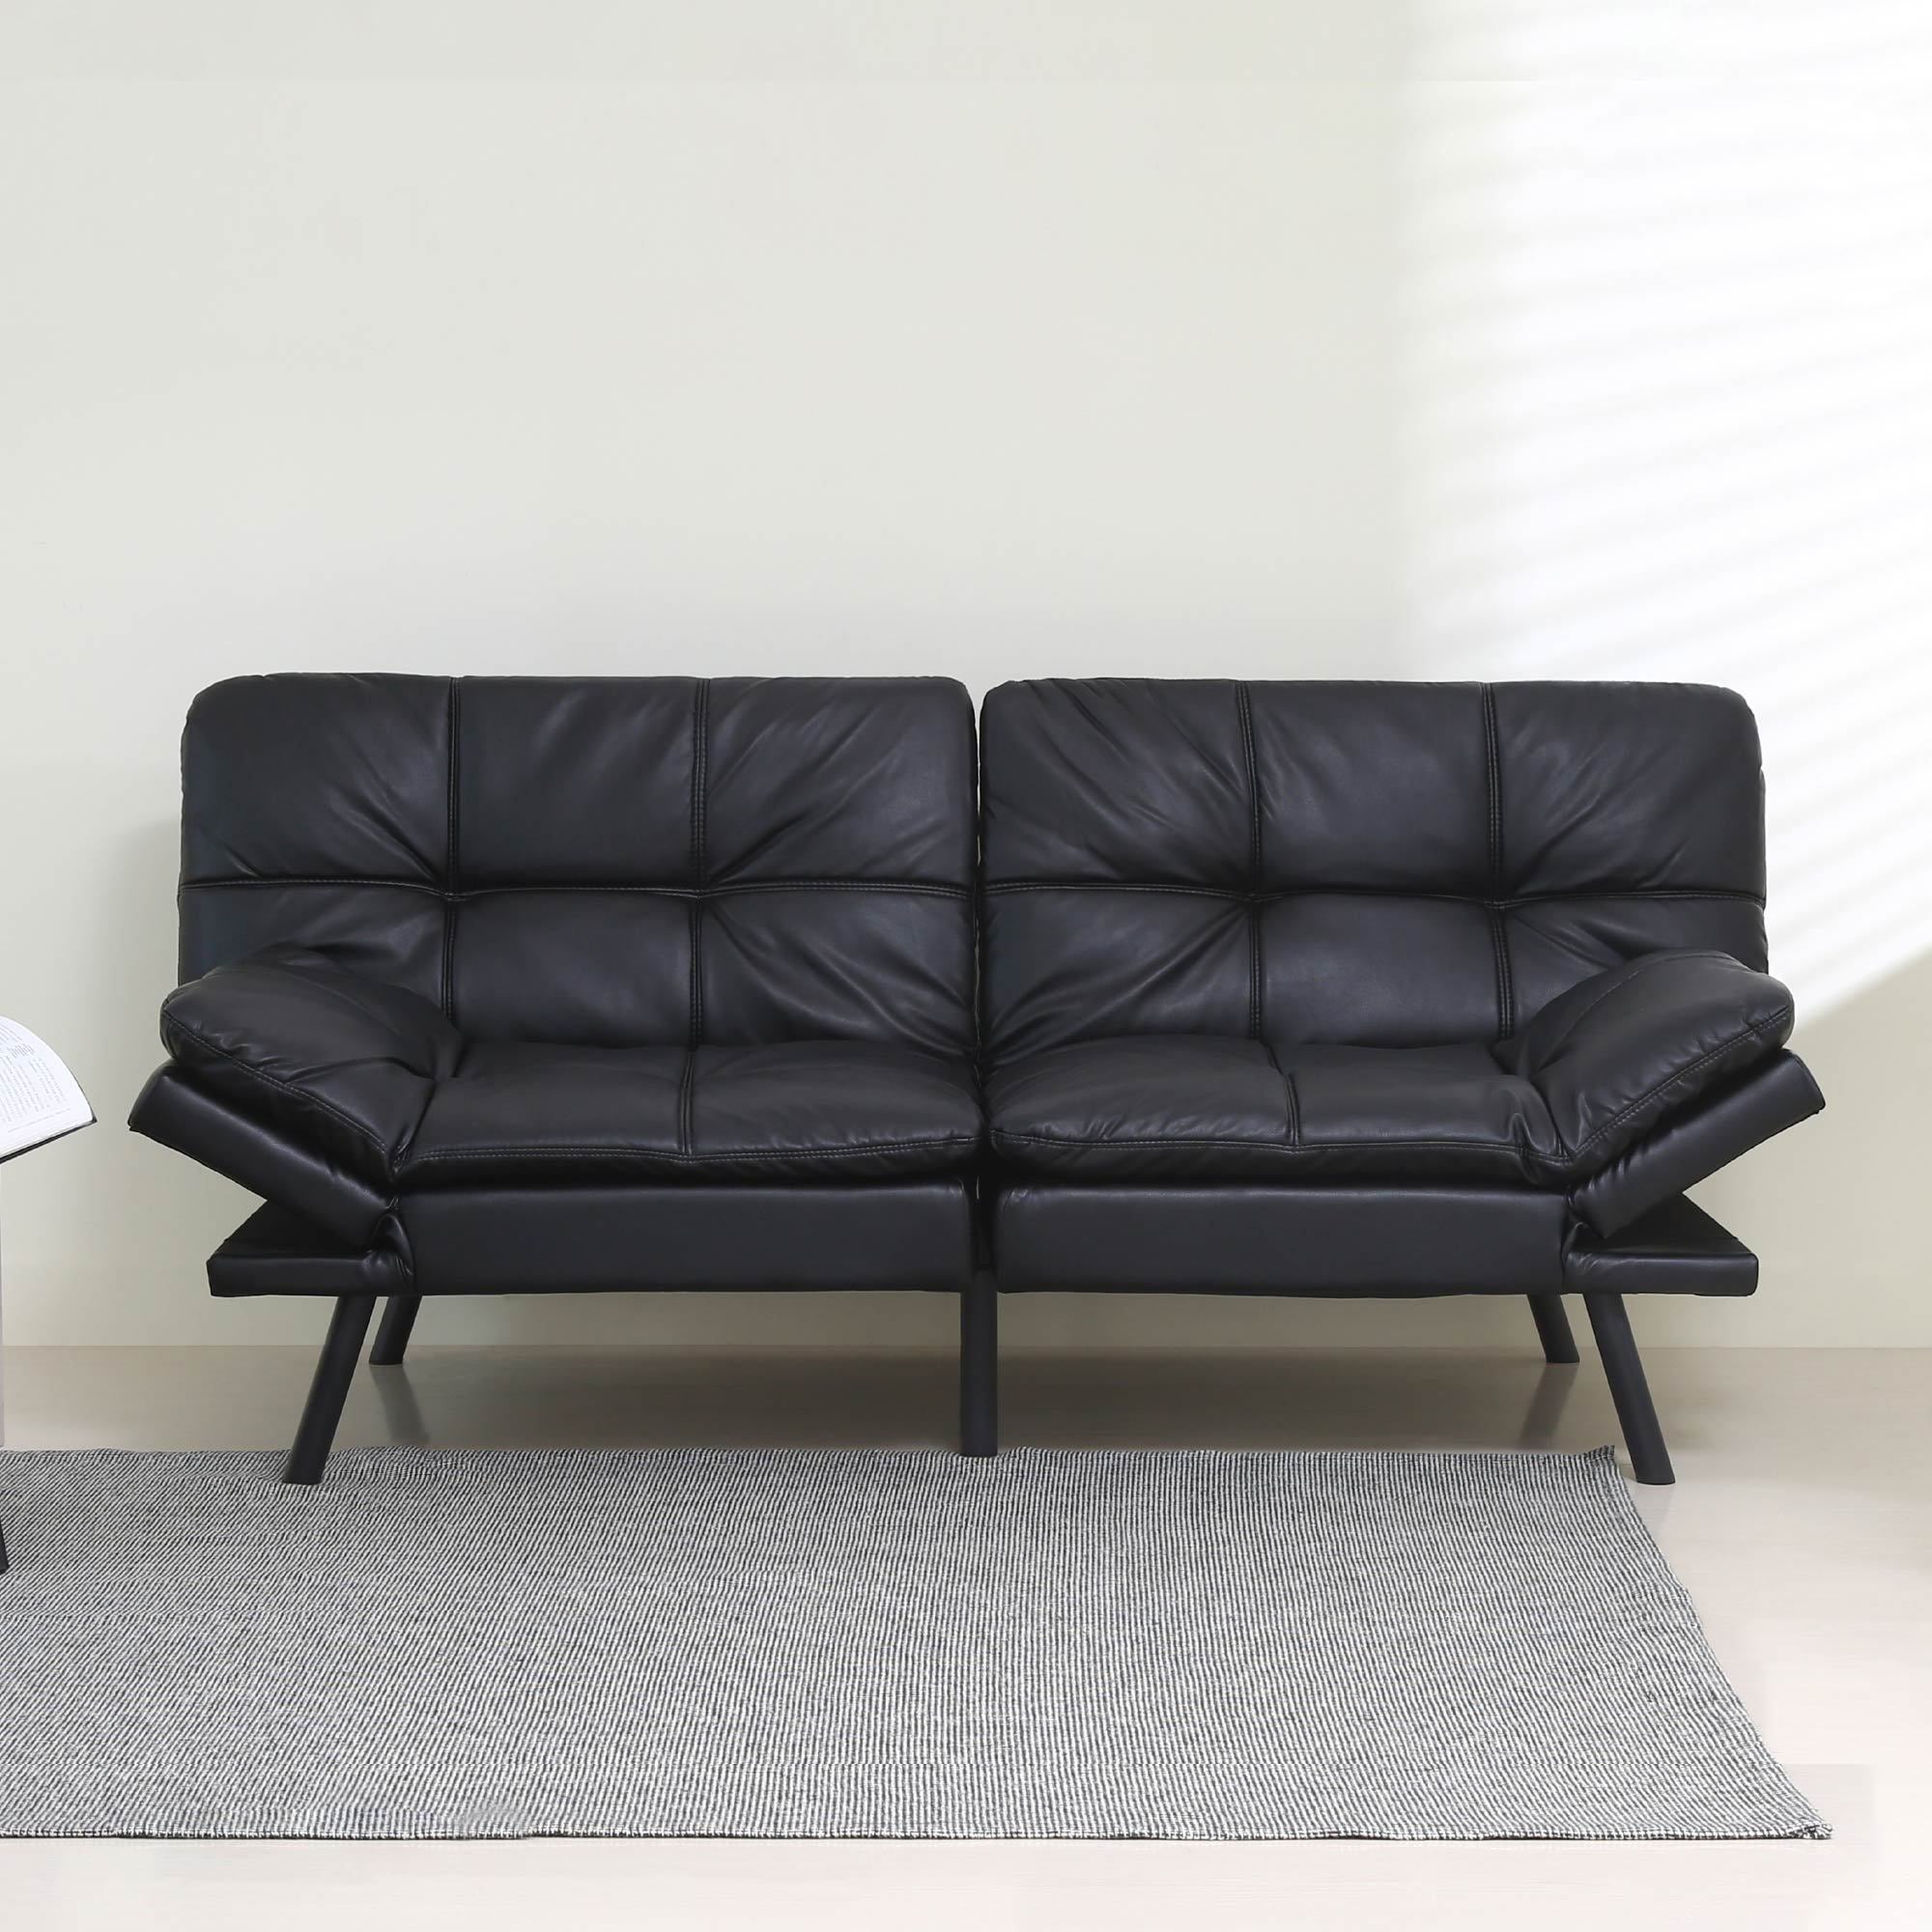 Convertible Memory Foam Futon Couch Bed, Modern black-pu